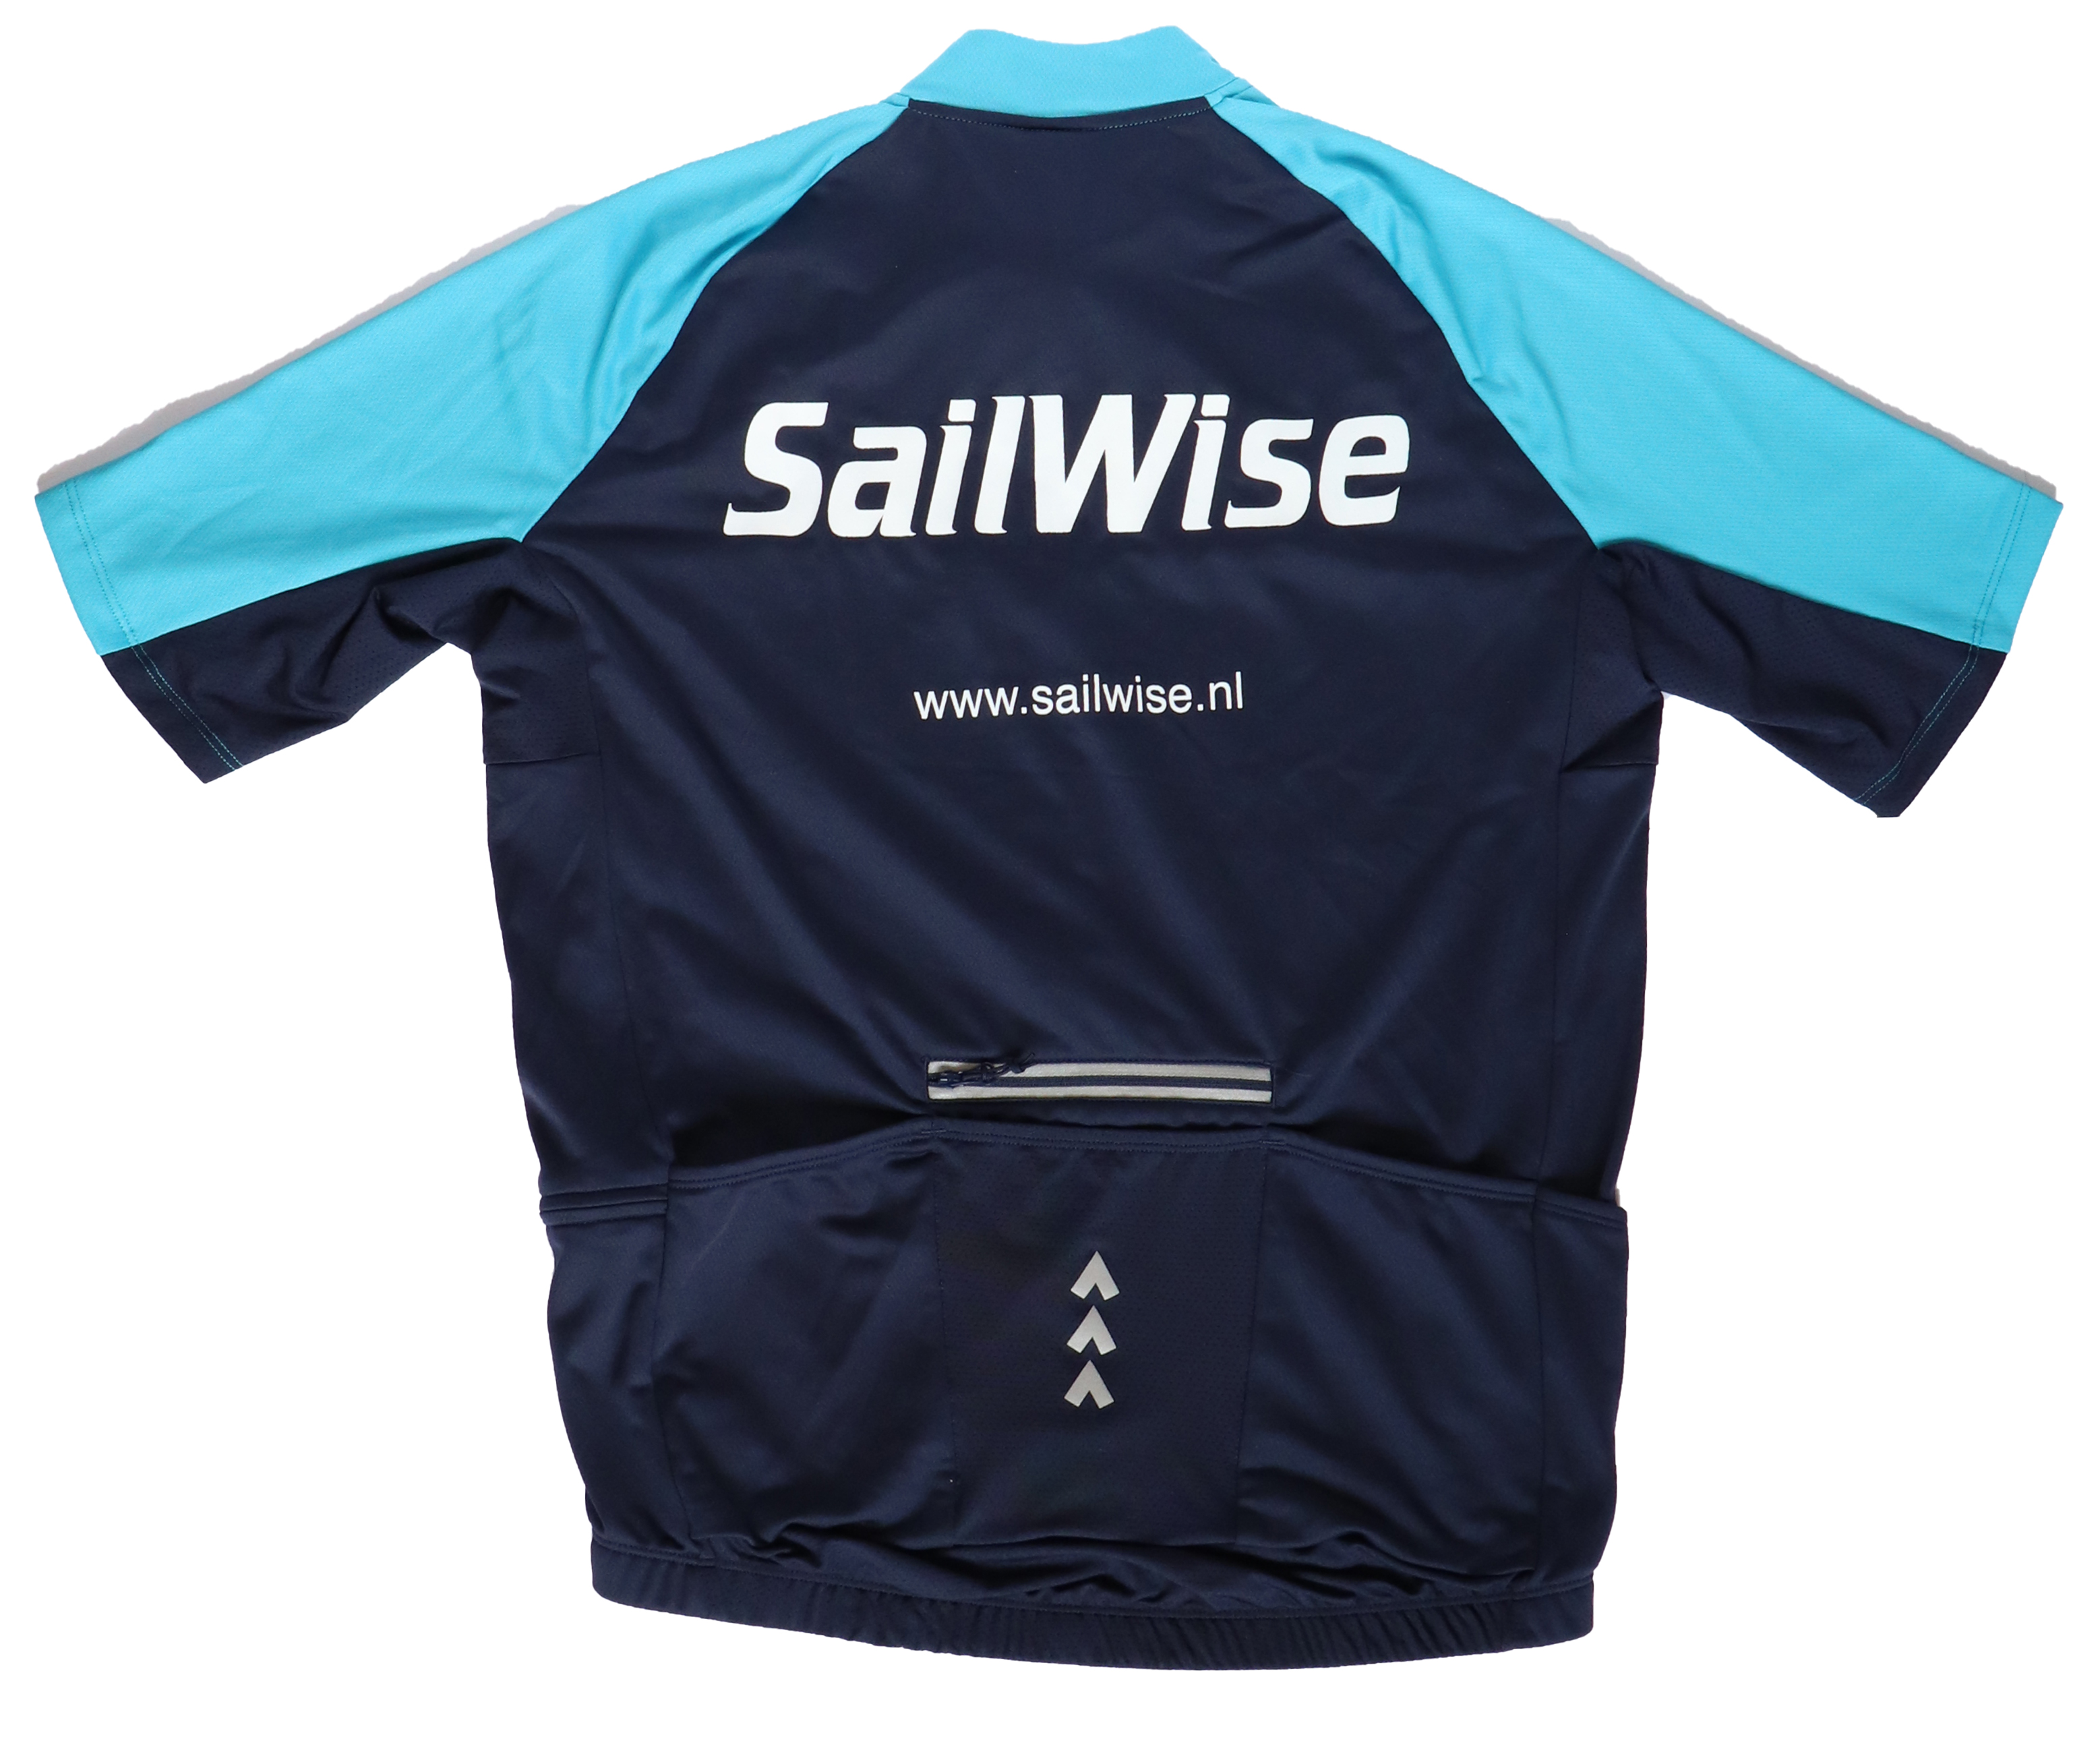 SailWise Bike Tour 2019